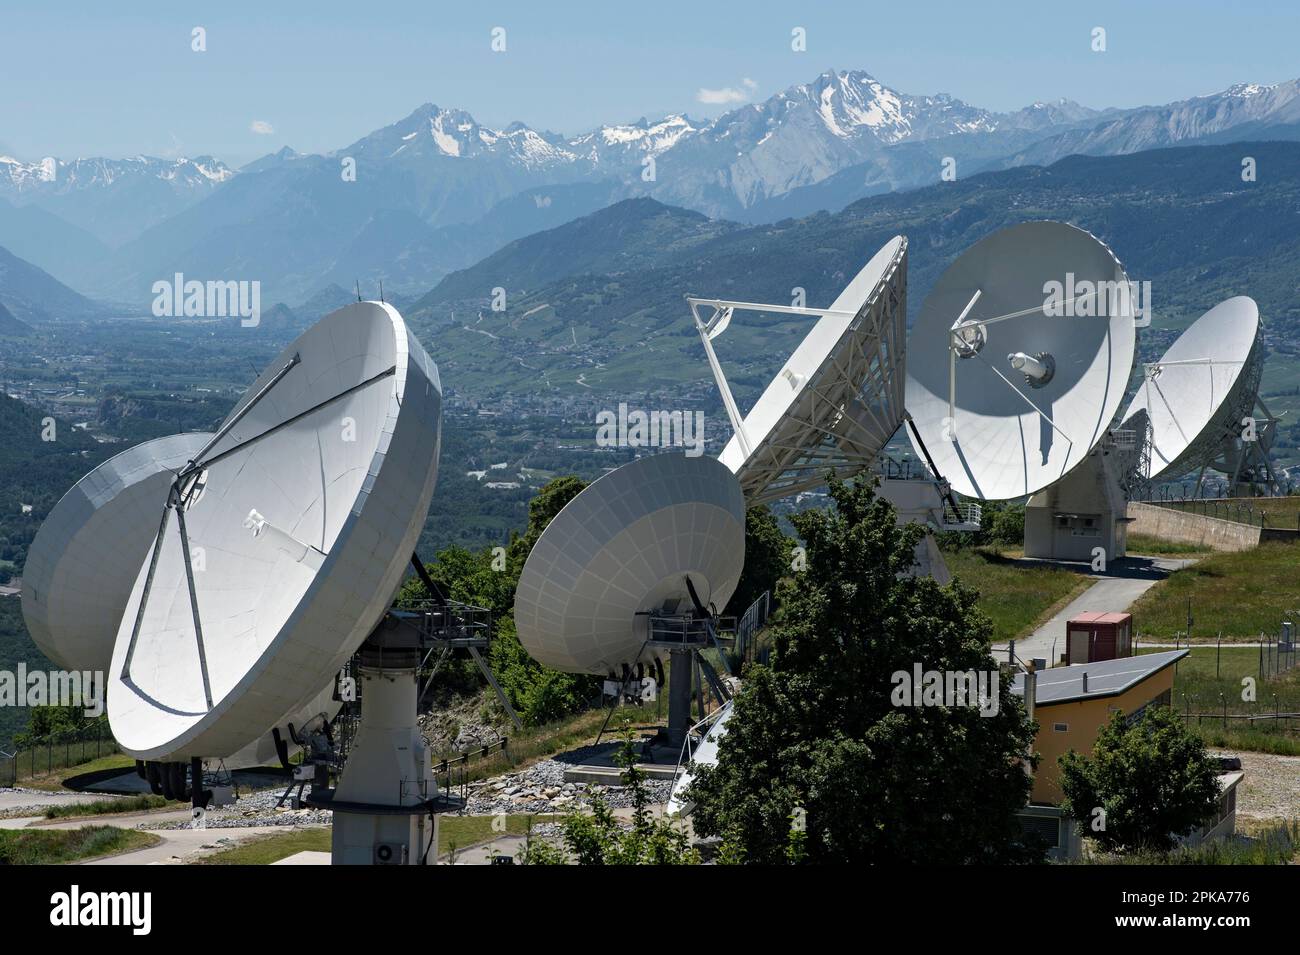 Parabolic antennas of a satellite ground station, Leuk, Valais, Switzerland Stock Photo